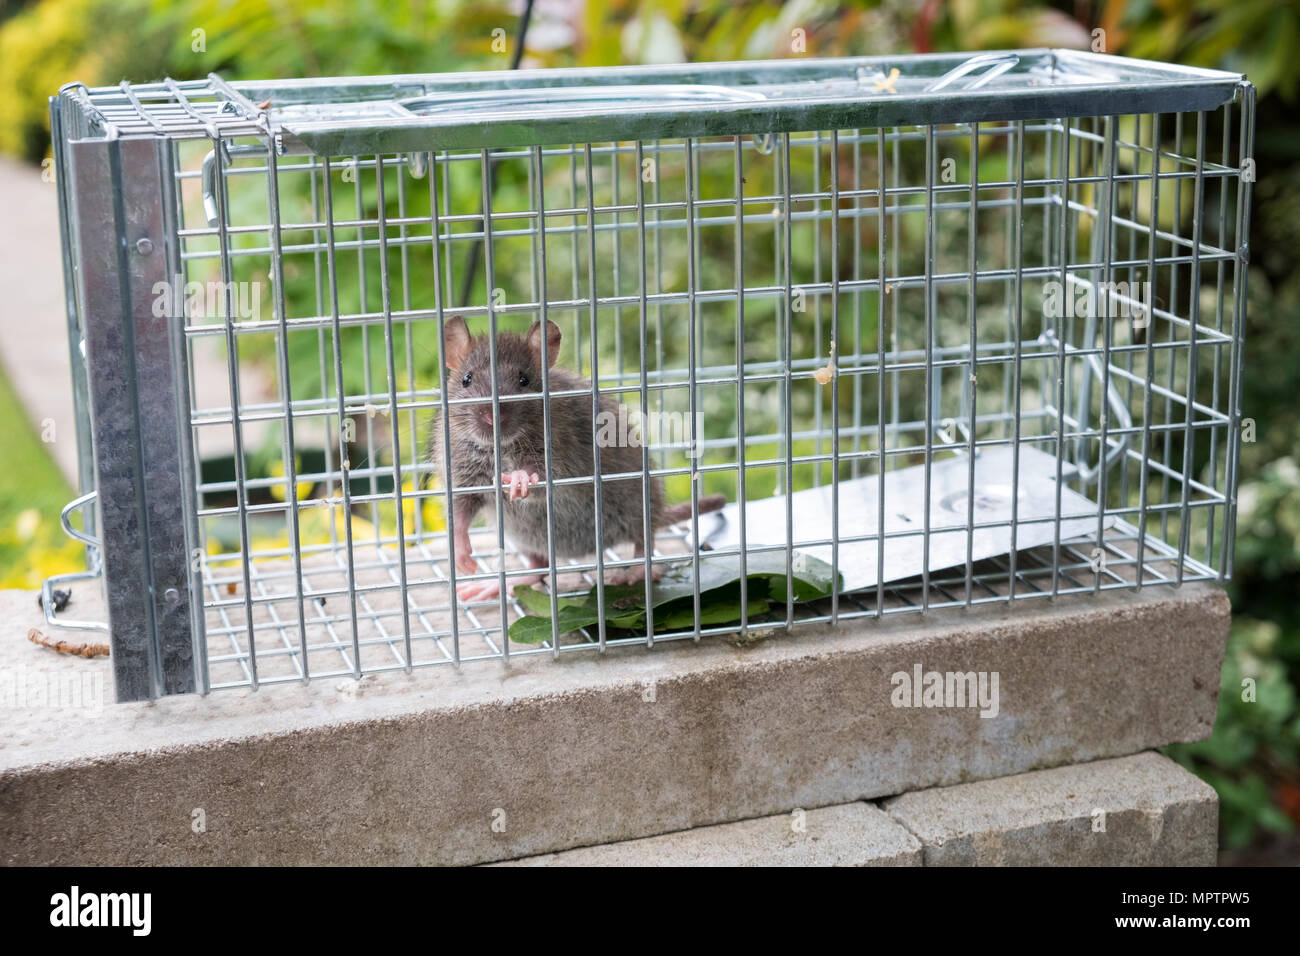 https://c8.alamy.com/comp/MPTPW5/wildlife-brown-rat-caught-in-a-humane-trap-rattus-norvegicus-MPTPW5.jpg